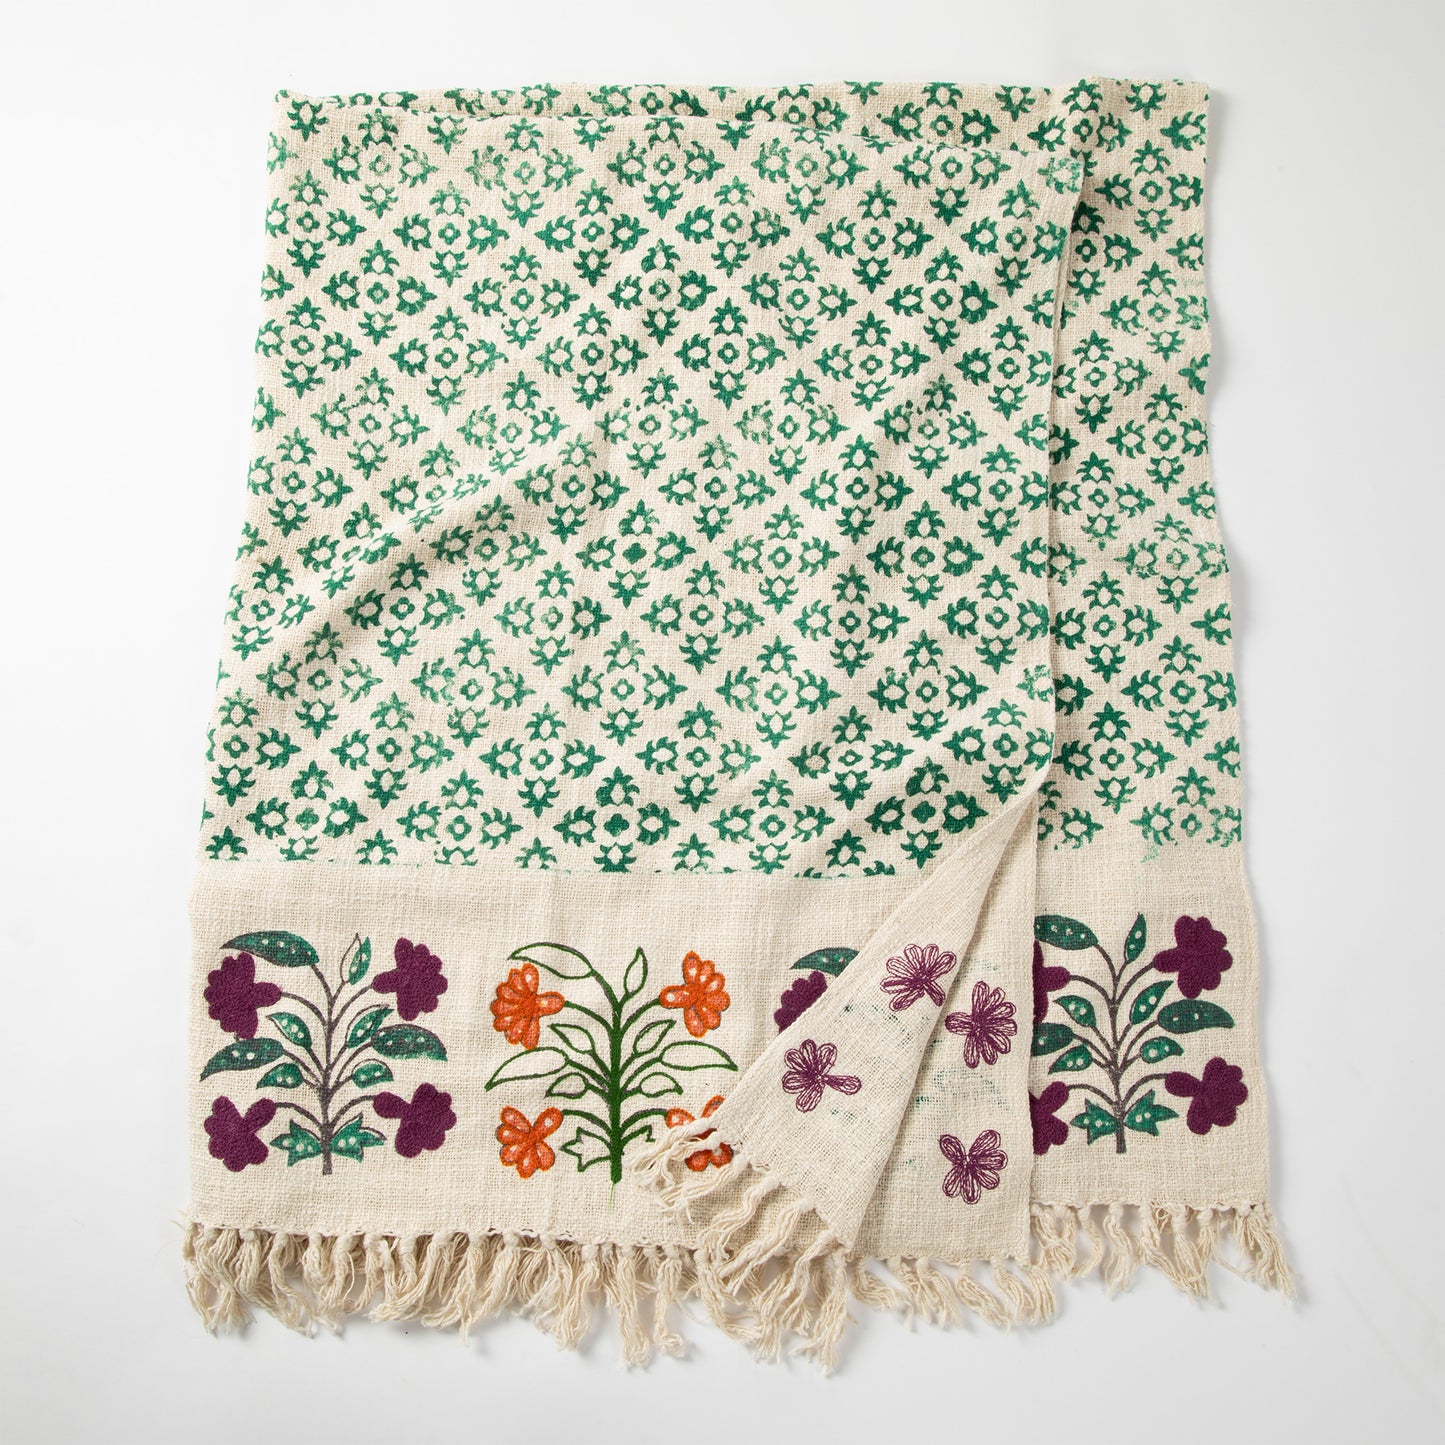 Woven Floral Block Print Throw Blanket